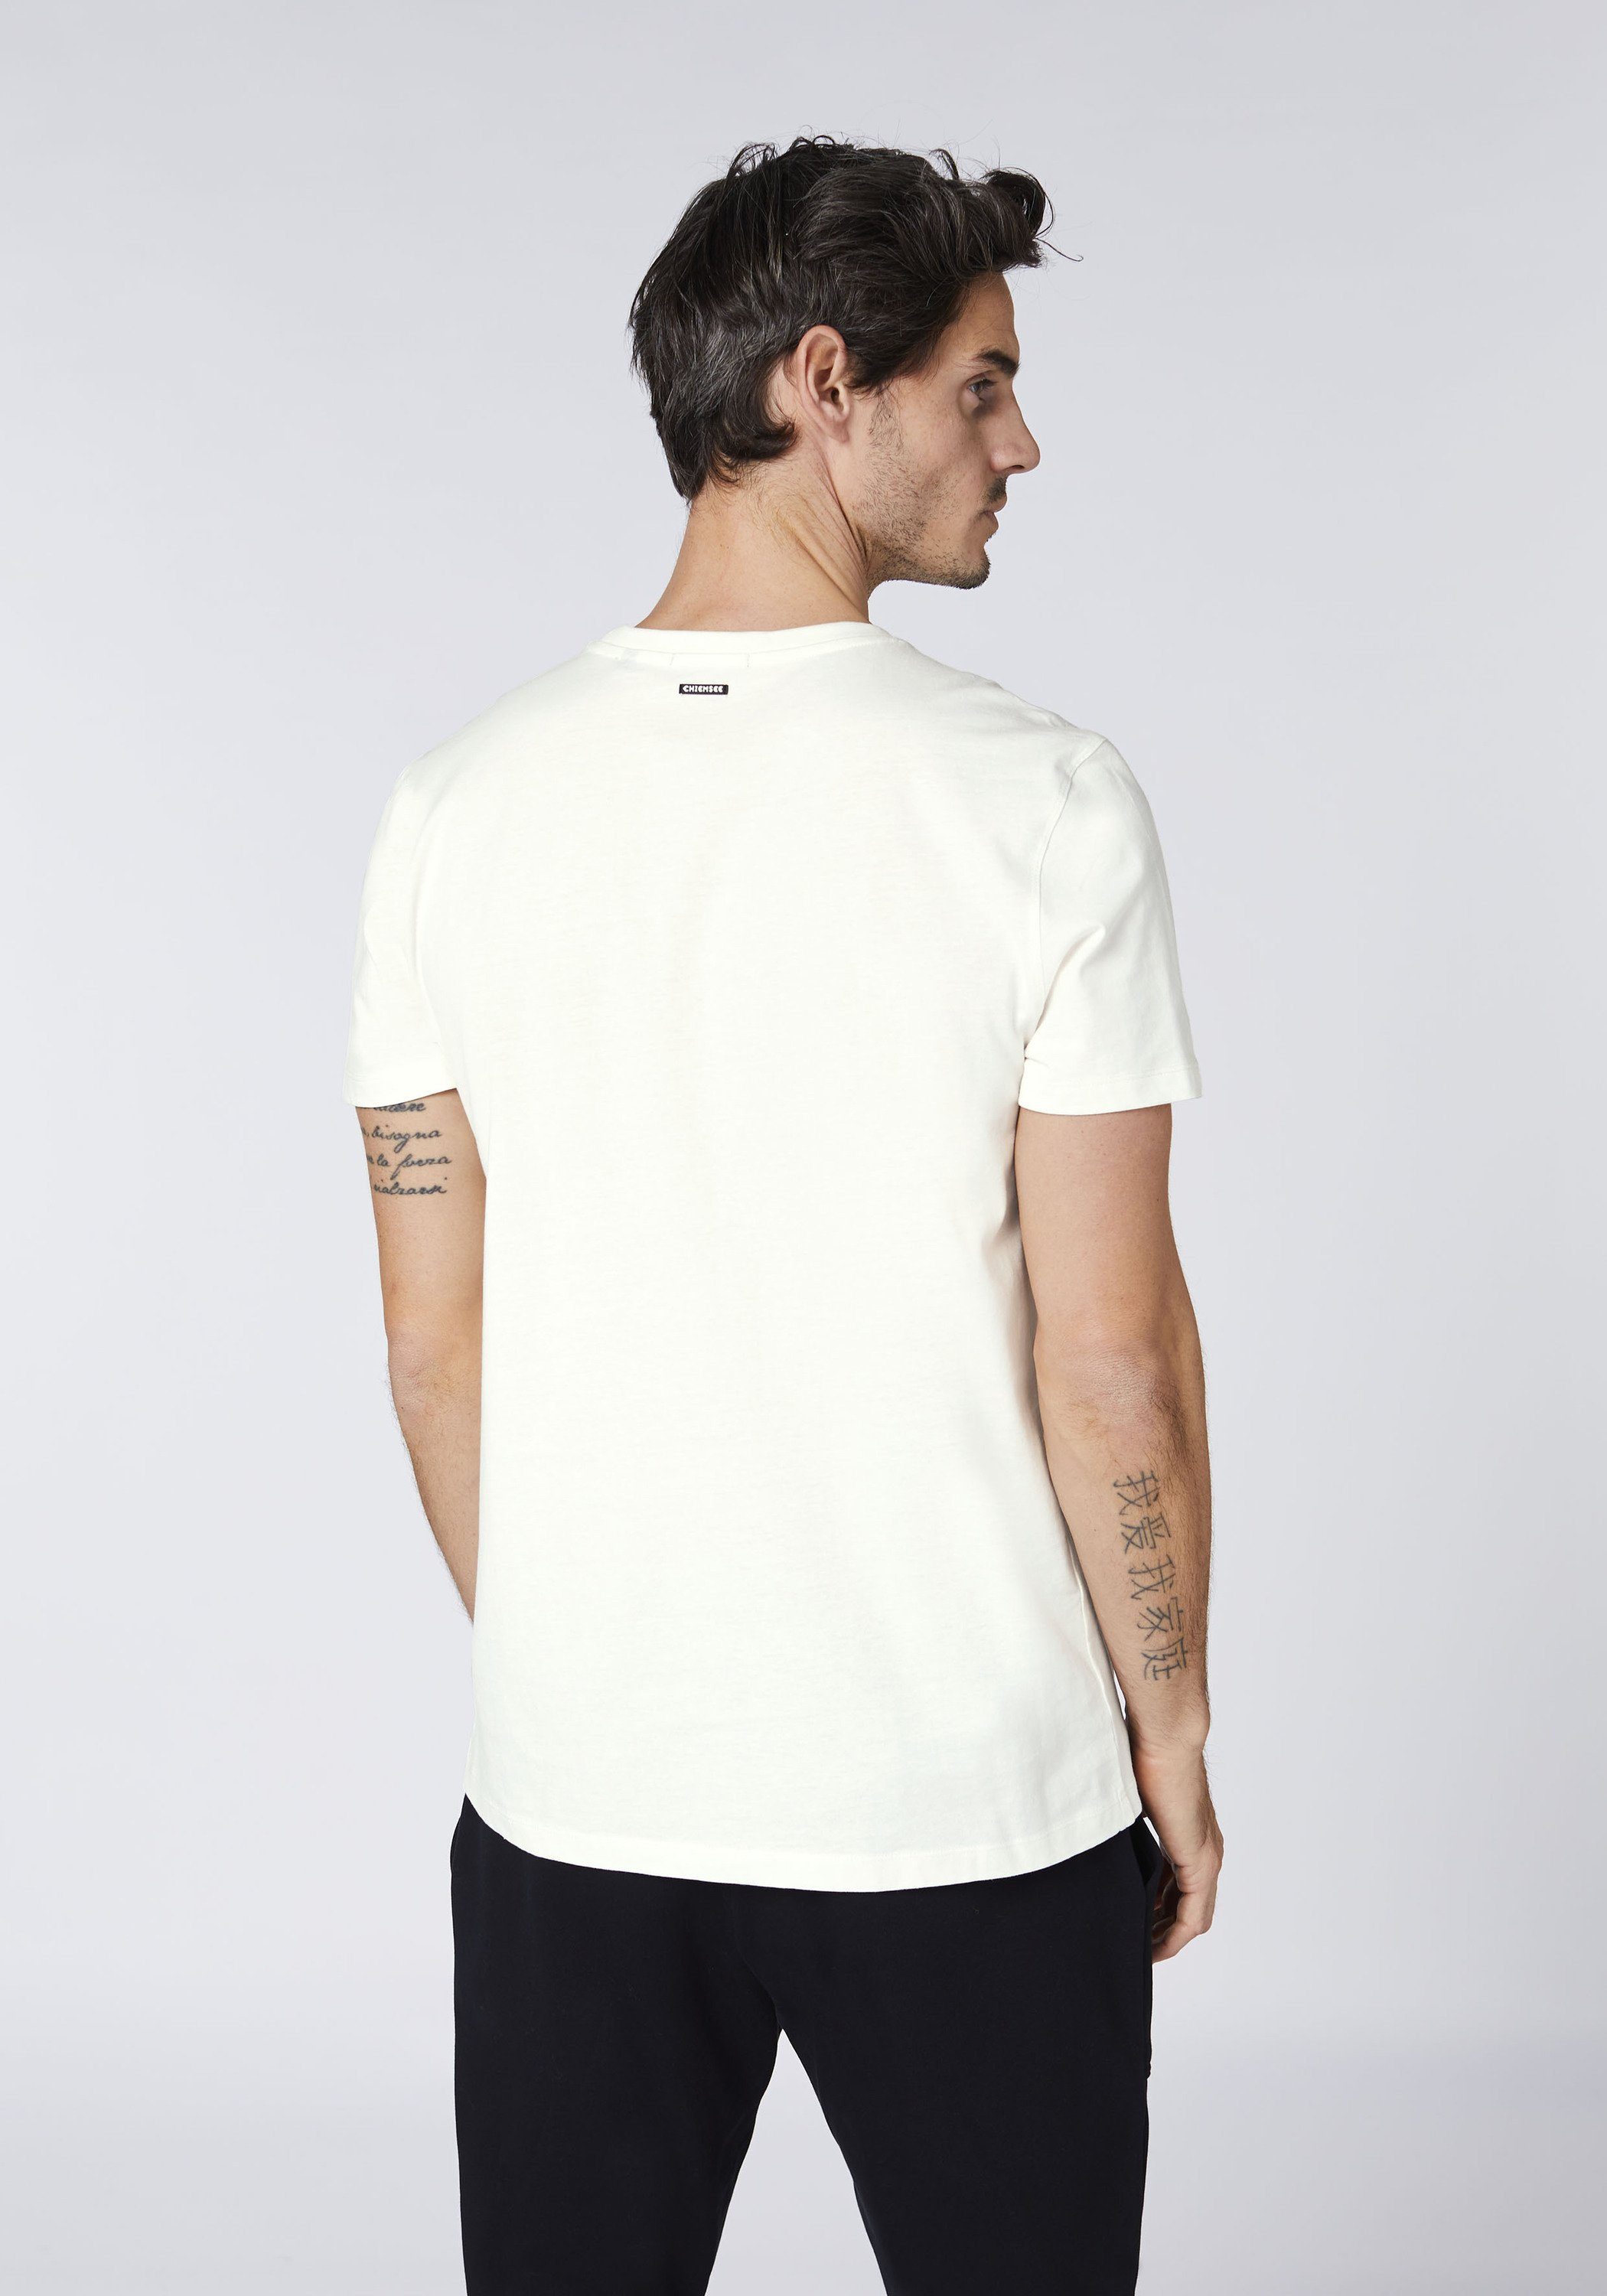 mit Chiemsee White T-Shirt PLUS-MINUS-Print Print-Shirt Star 1